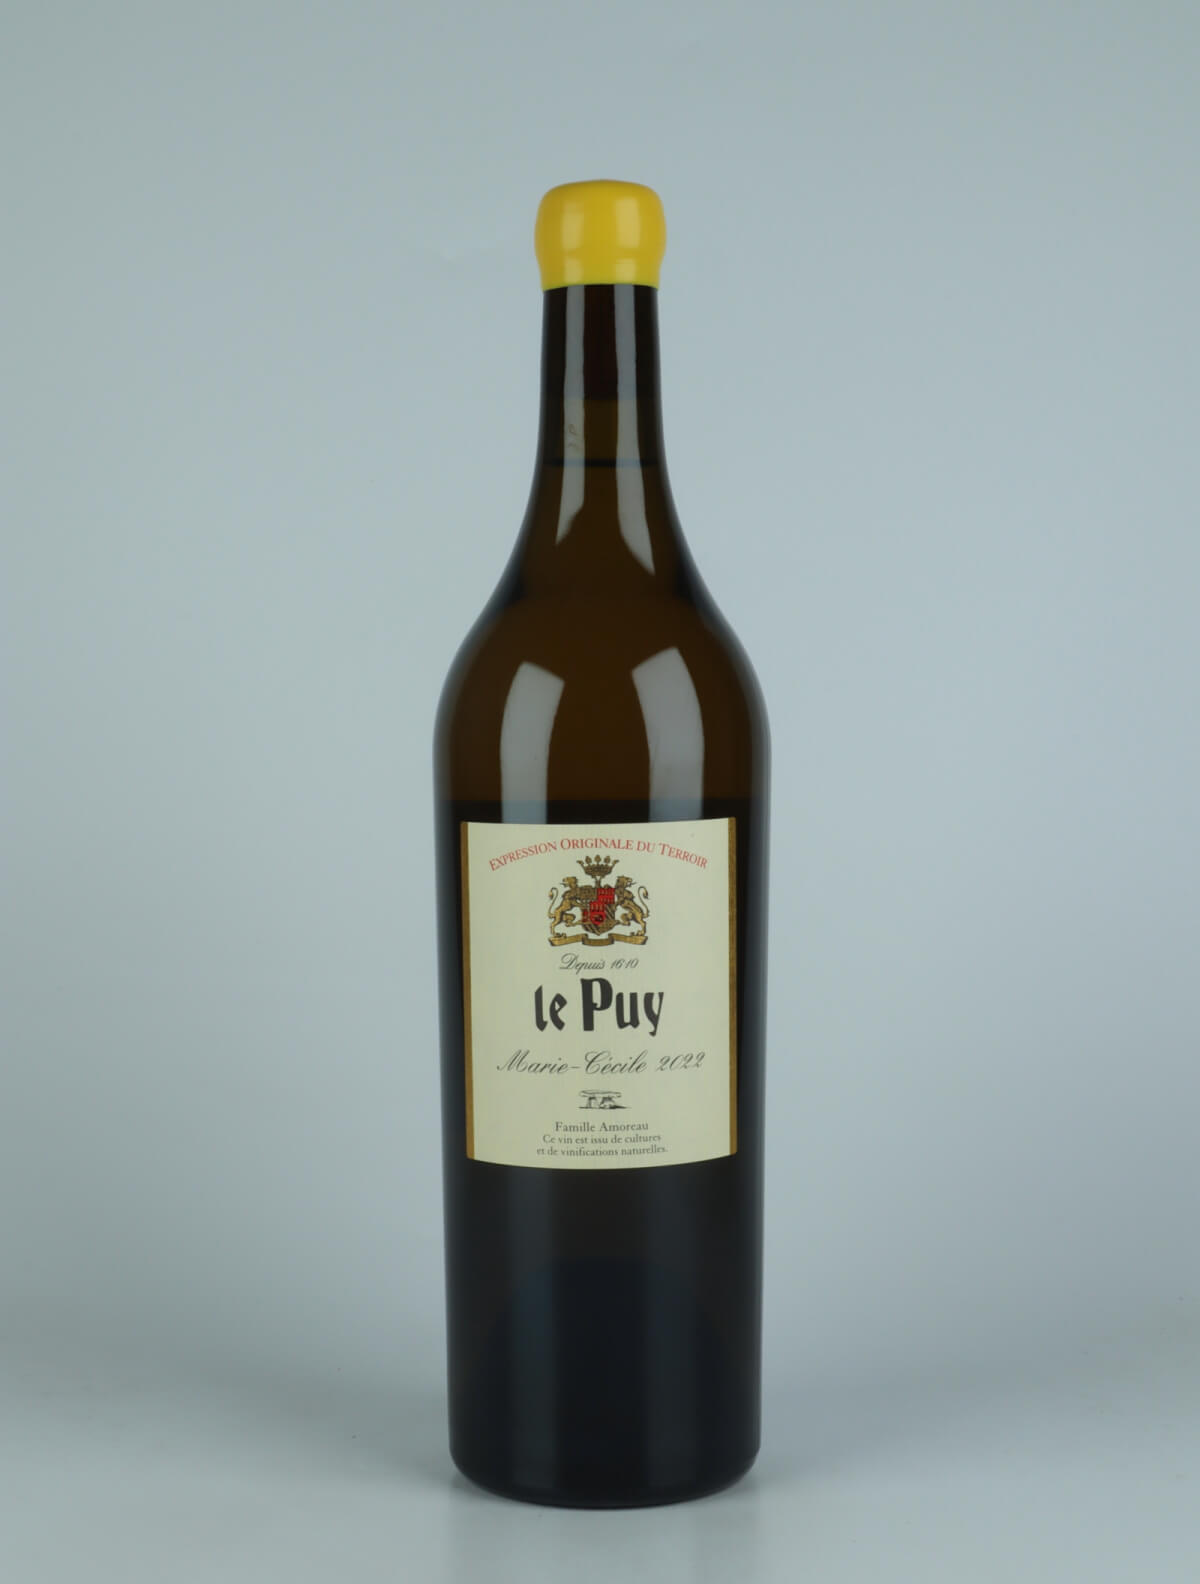 A bottle 2022 Marie-Cécile White wine from Château le Puy, Bordeaux in France